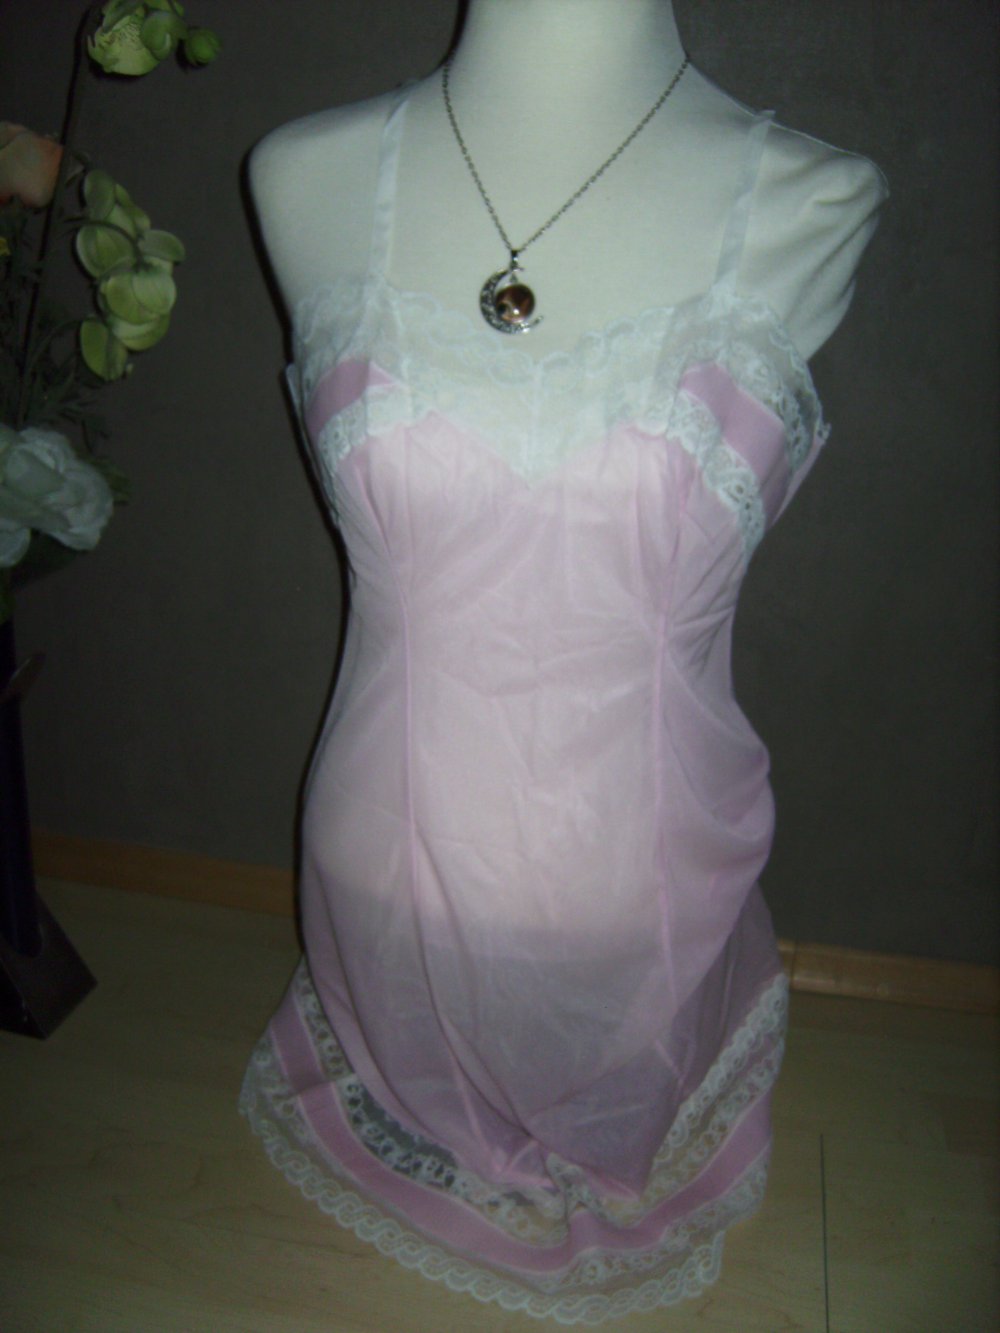 True Vintage Dessous Unterkleid Nachtkleid Hemdchen Gr\u00f6\u00dfe M 38 40 Rosa Rose Transparent Spitze Mode Dessous Negligees 